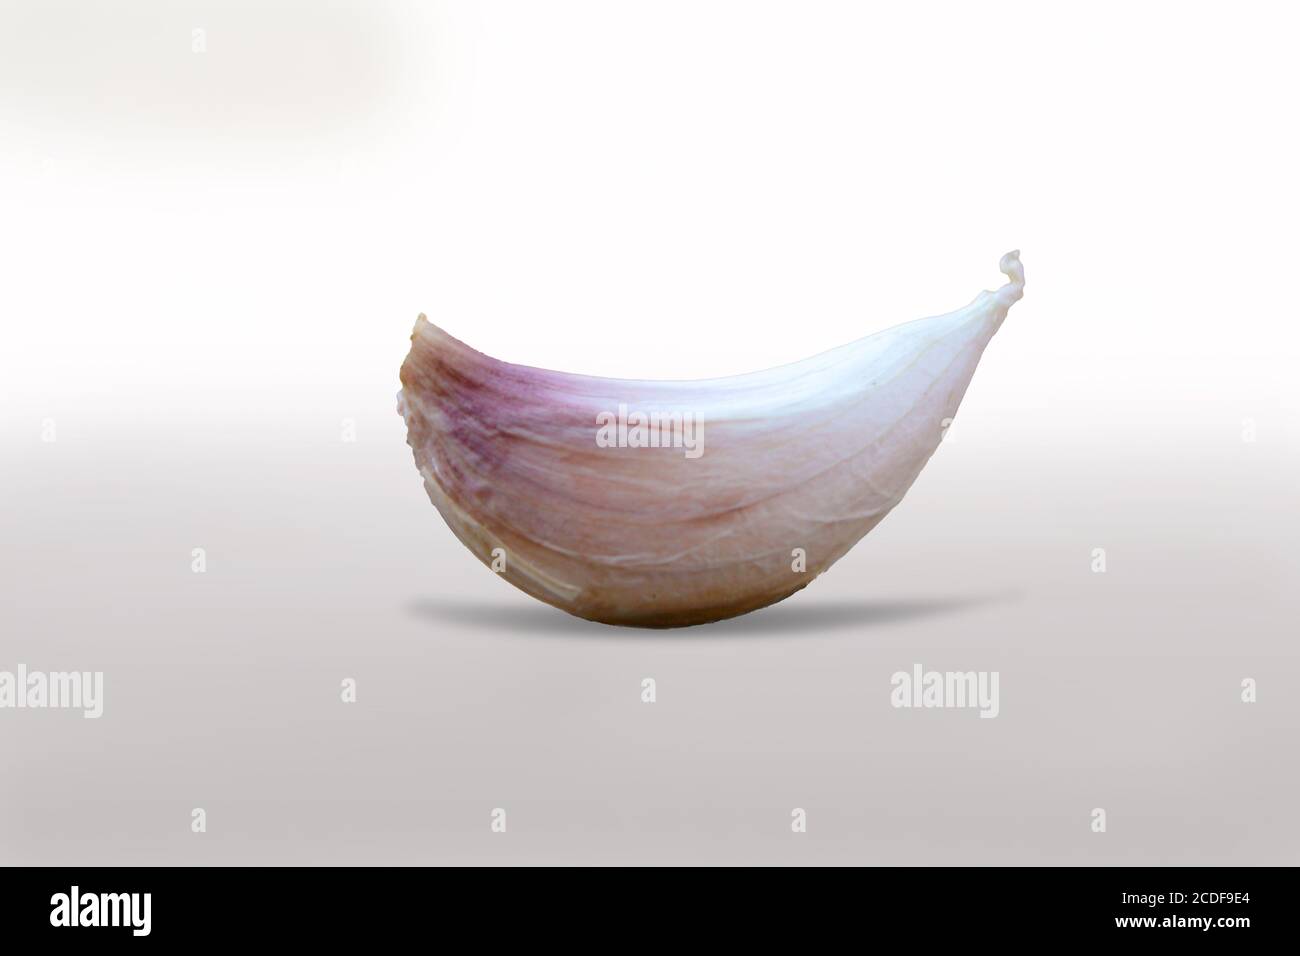 Garlic clove isolated on white background Stock Photo